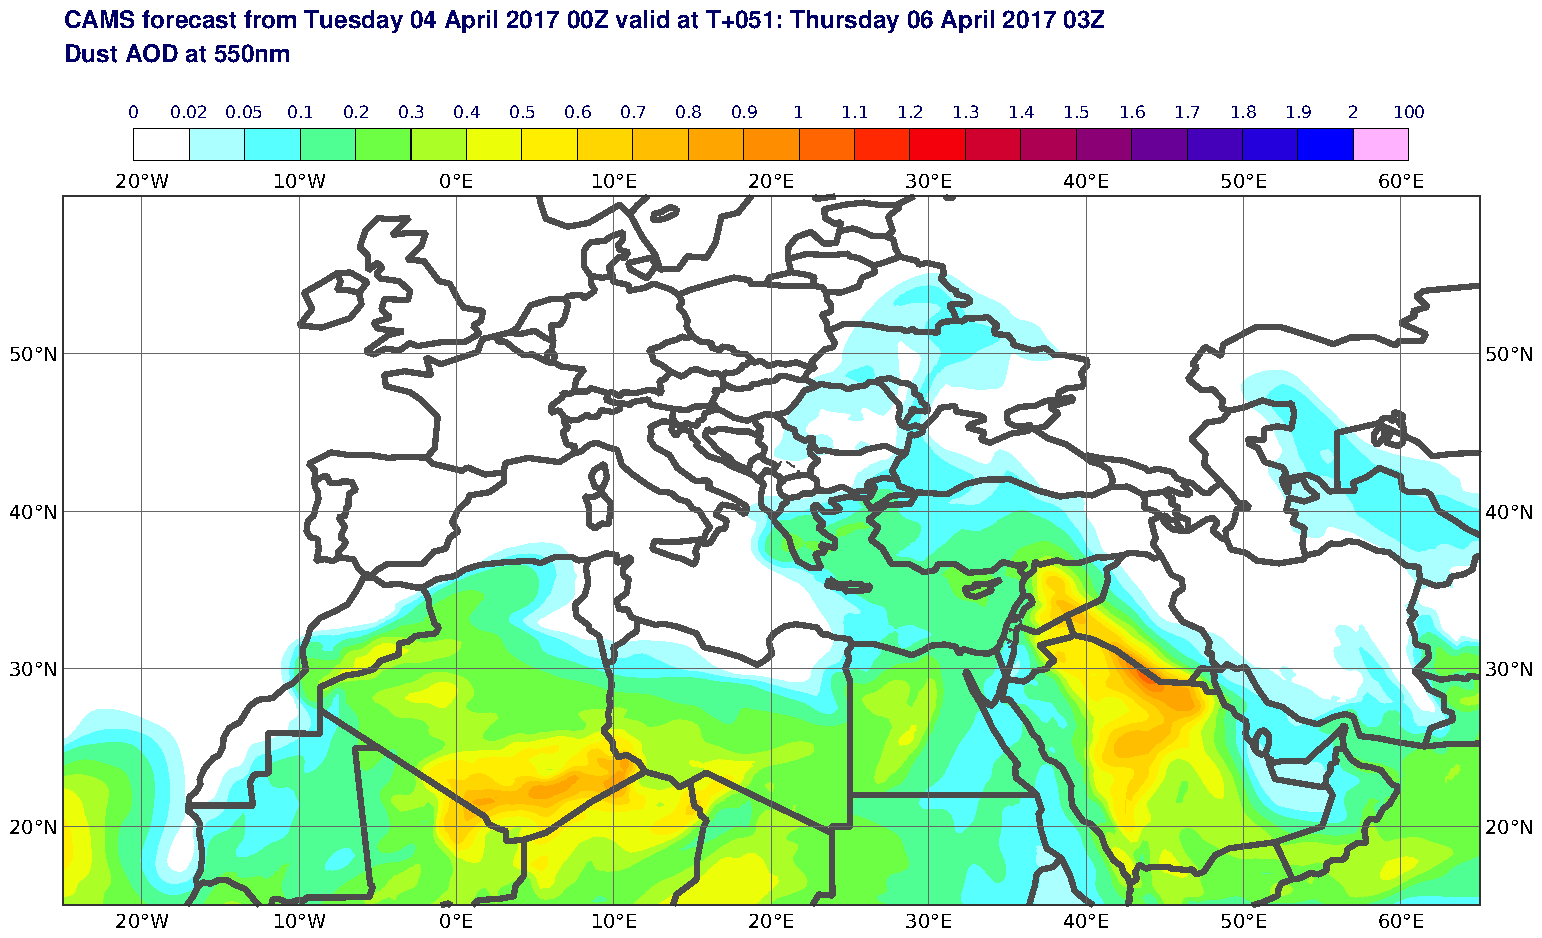 Dust AOD at 550nm valid at T51 - 2017-04-06 03:00